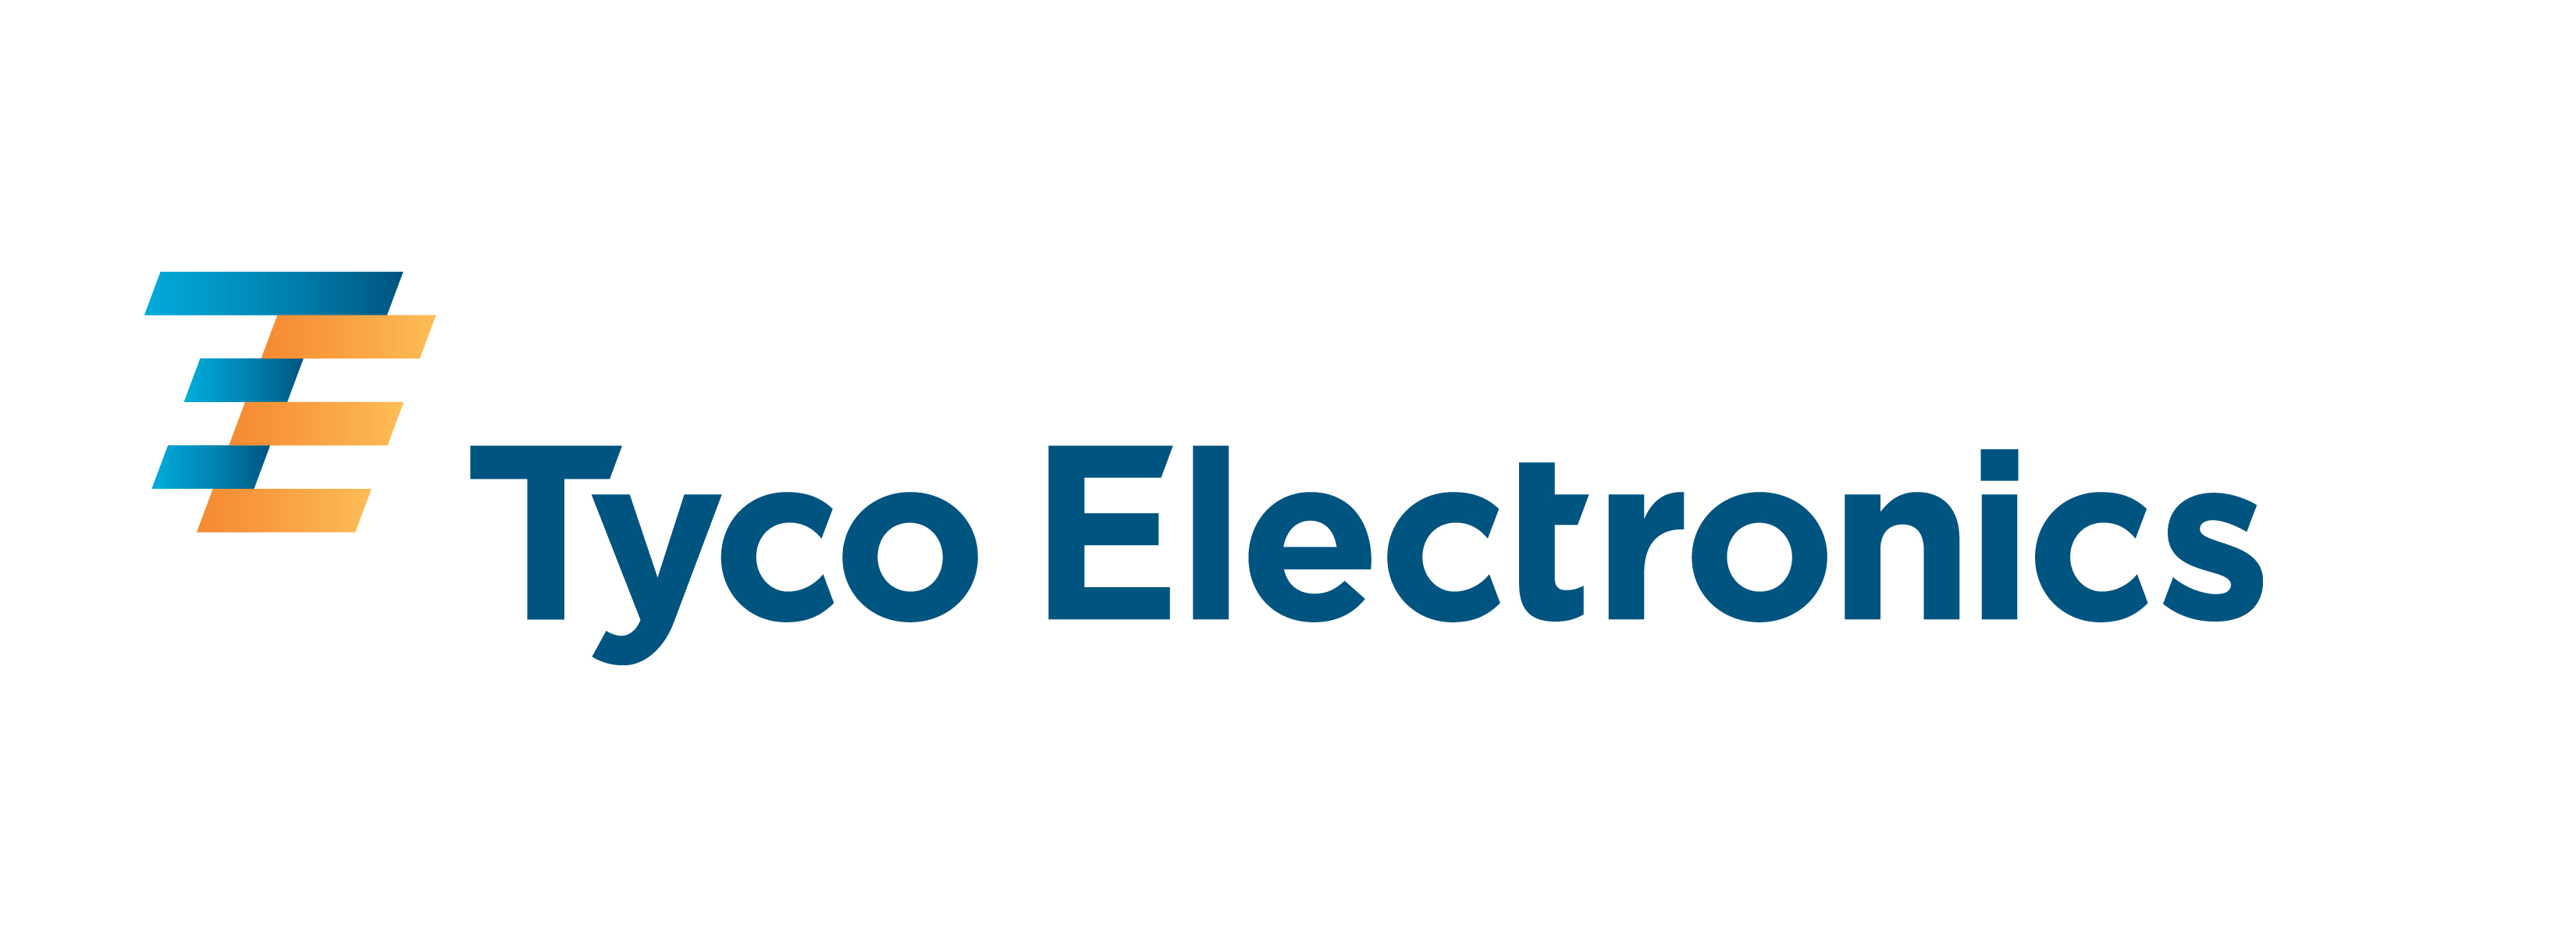 TYCO Electronics